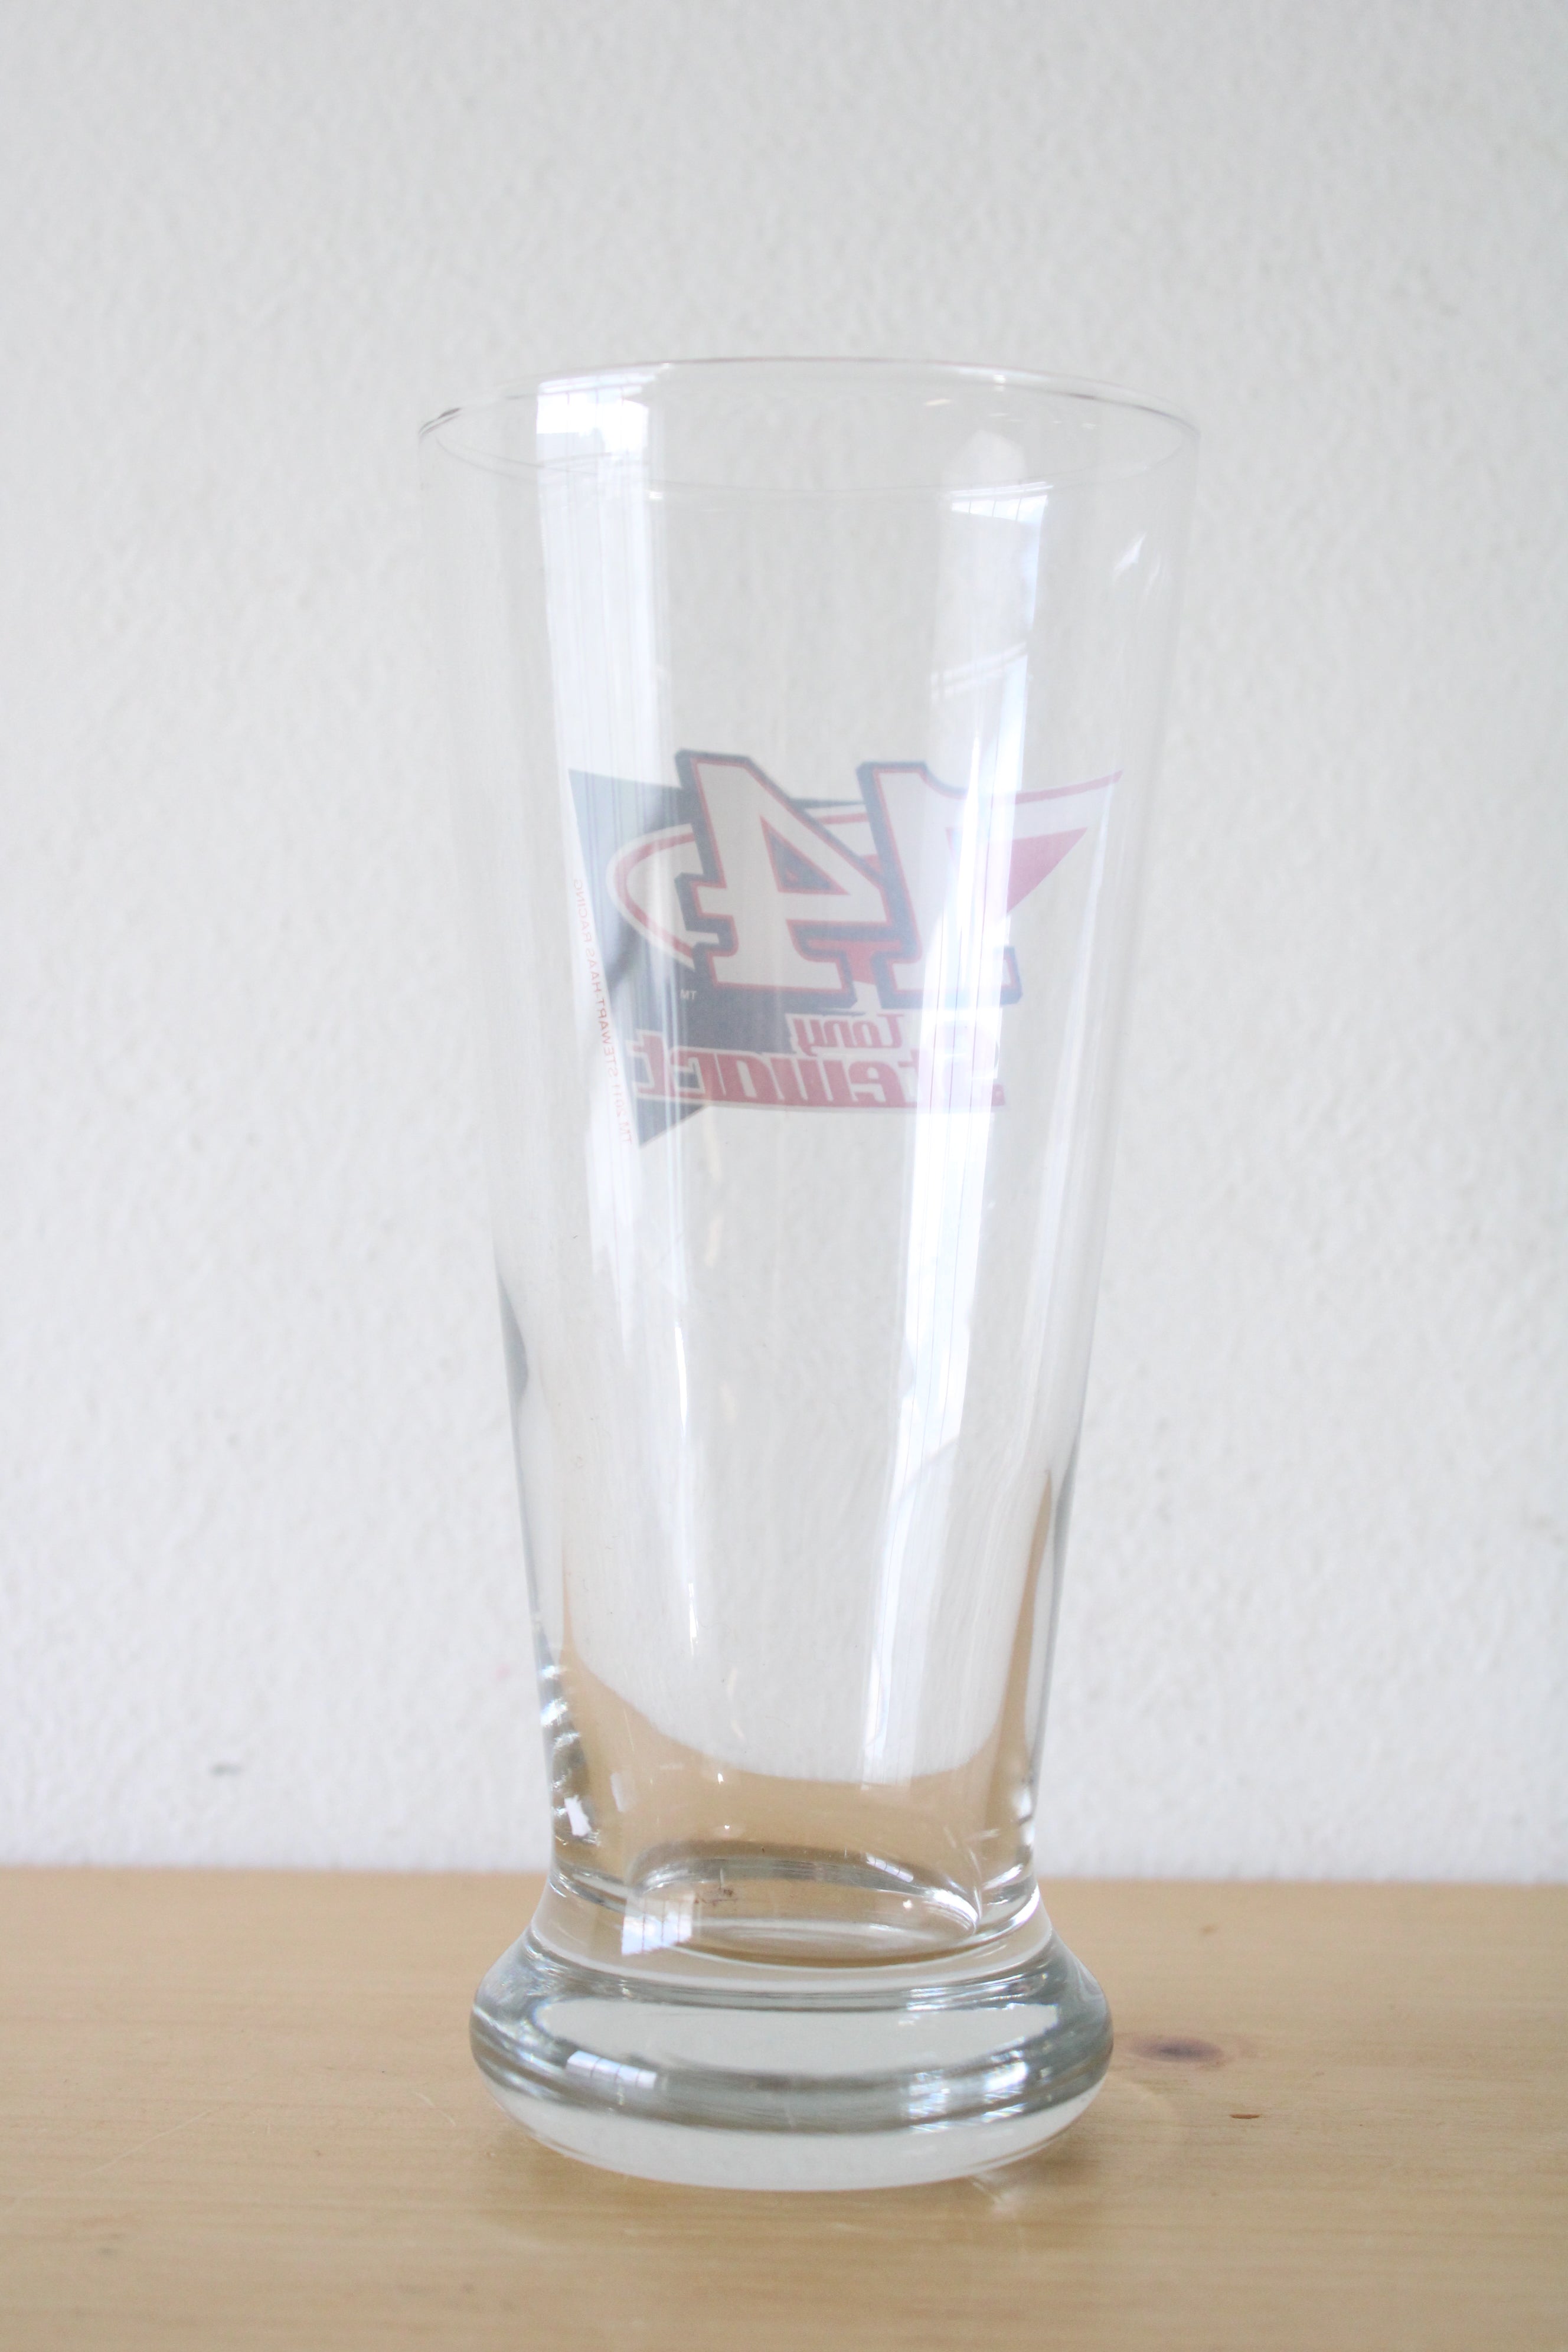 NASCAR Racing #14 Tony Stewart Beer Glass